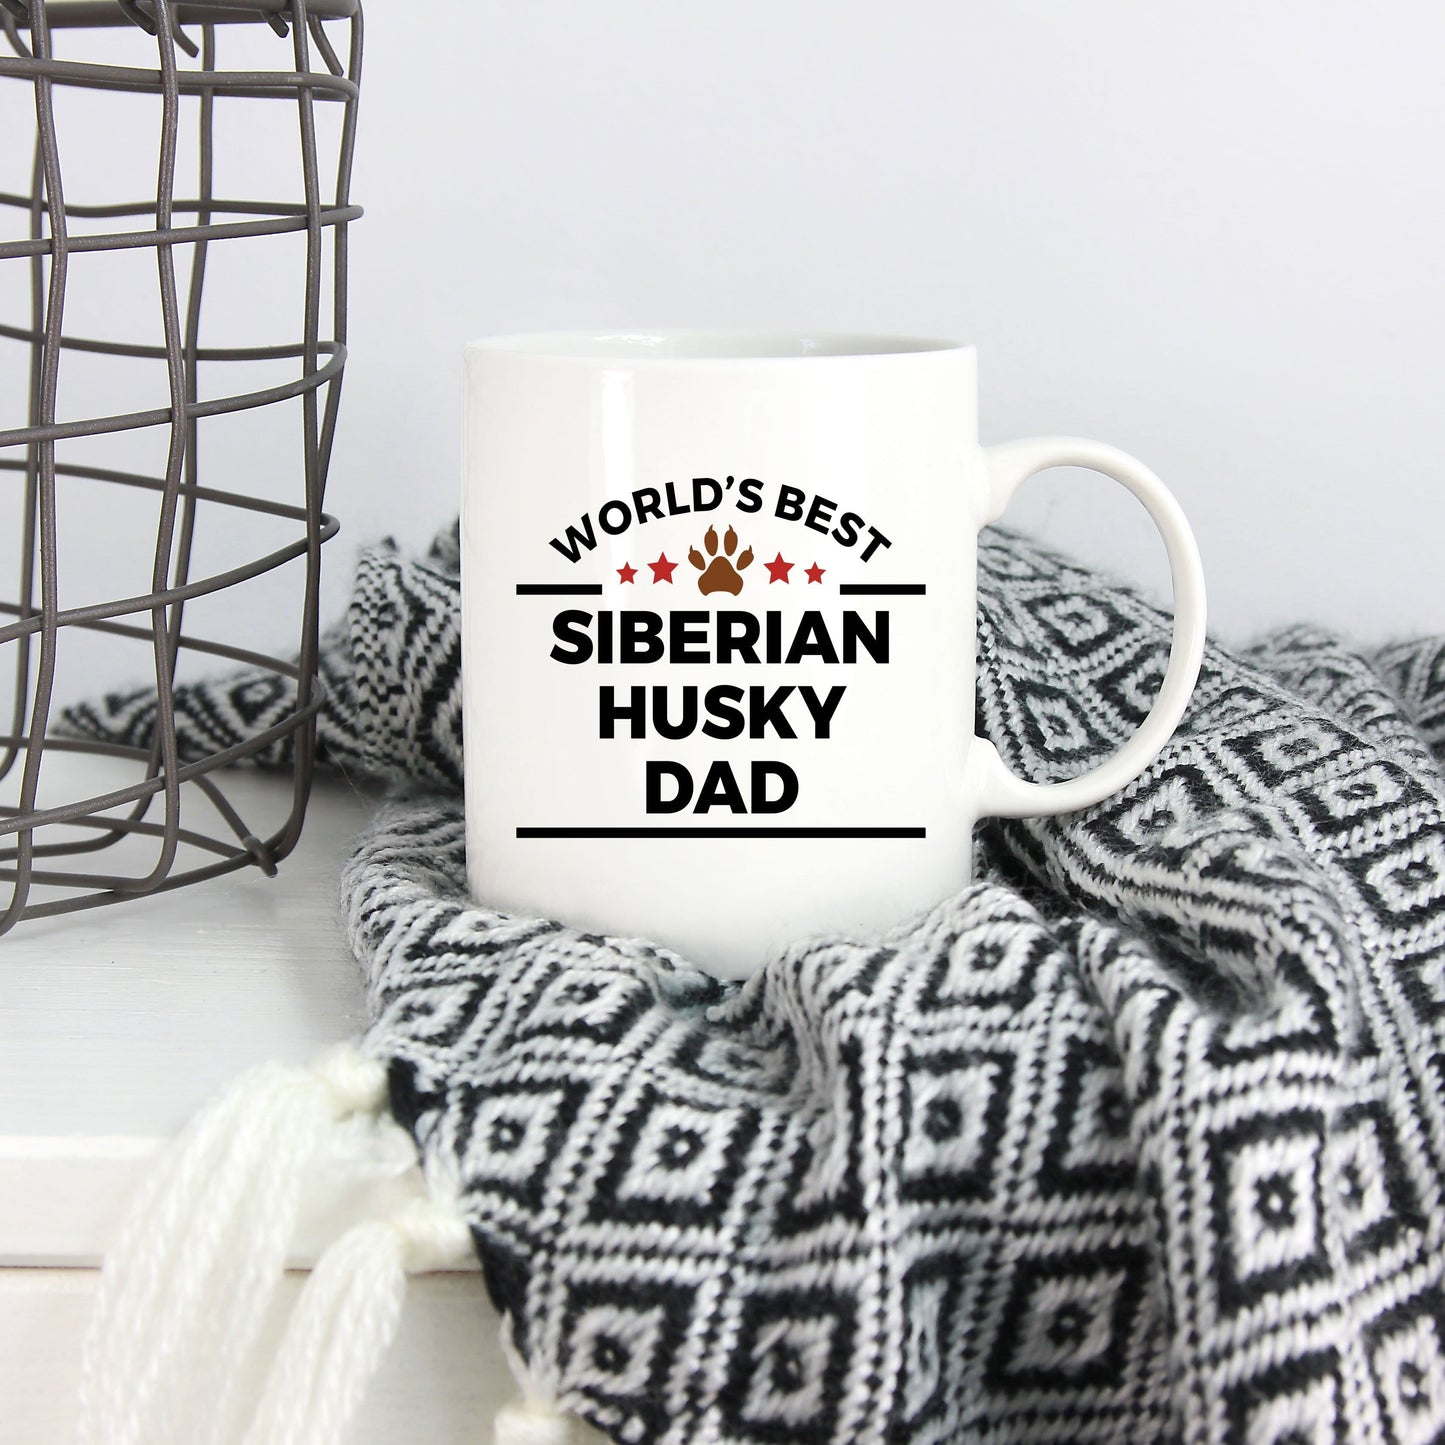 World's Best Siberian Husky Dad Ceramic Mug